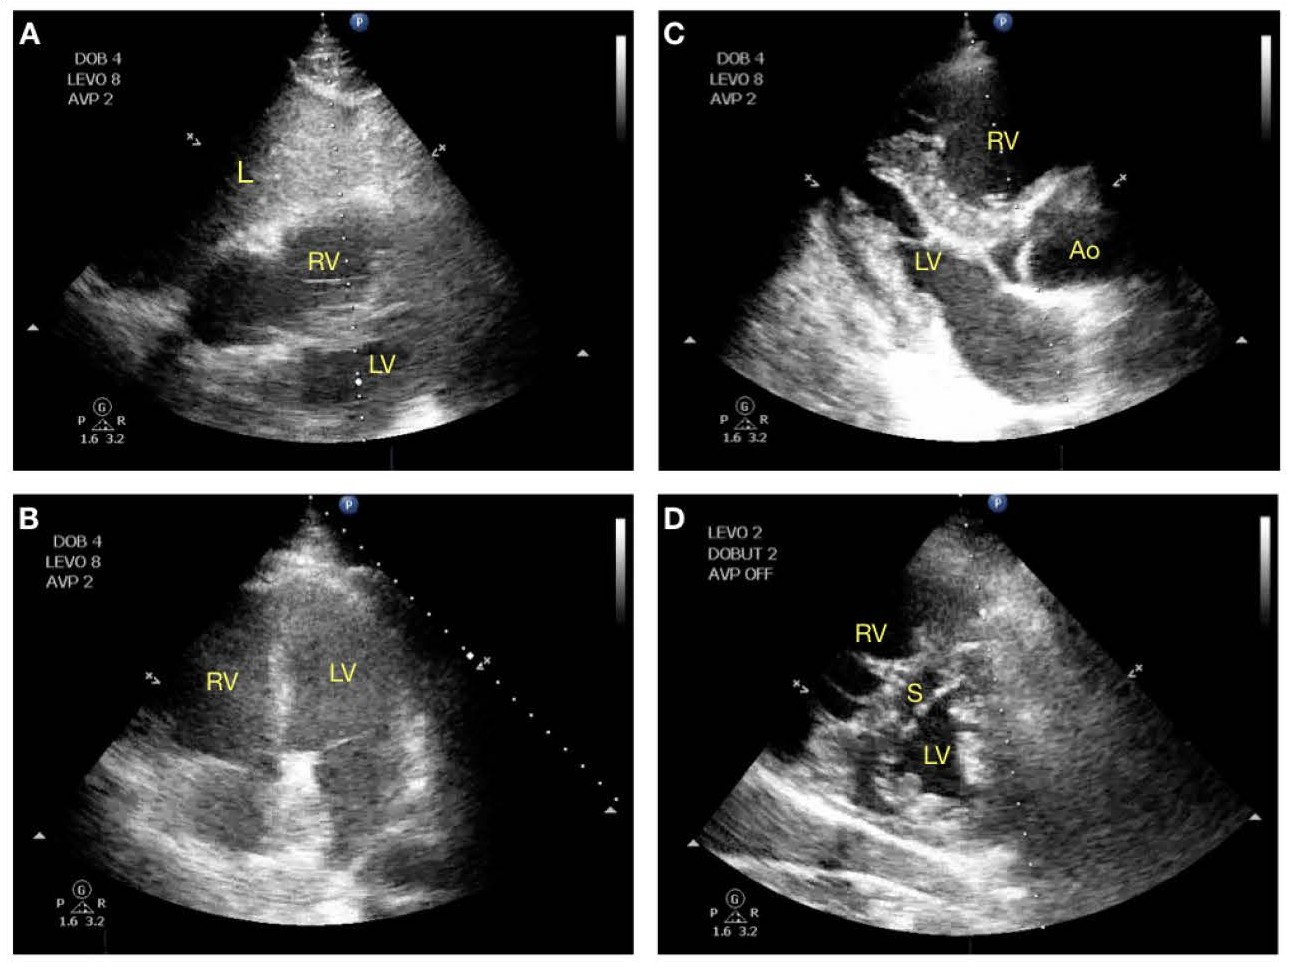  Cardiac ultrasound findings in COVID-19 patients